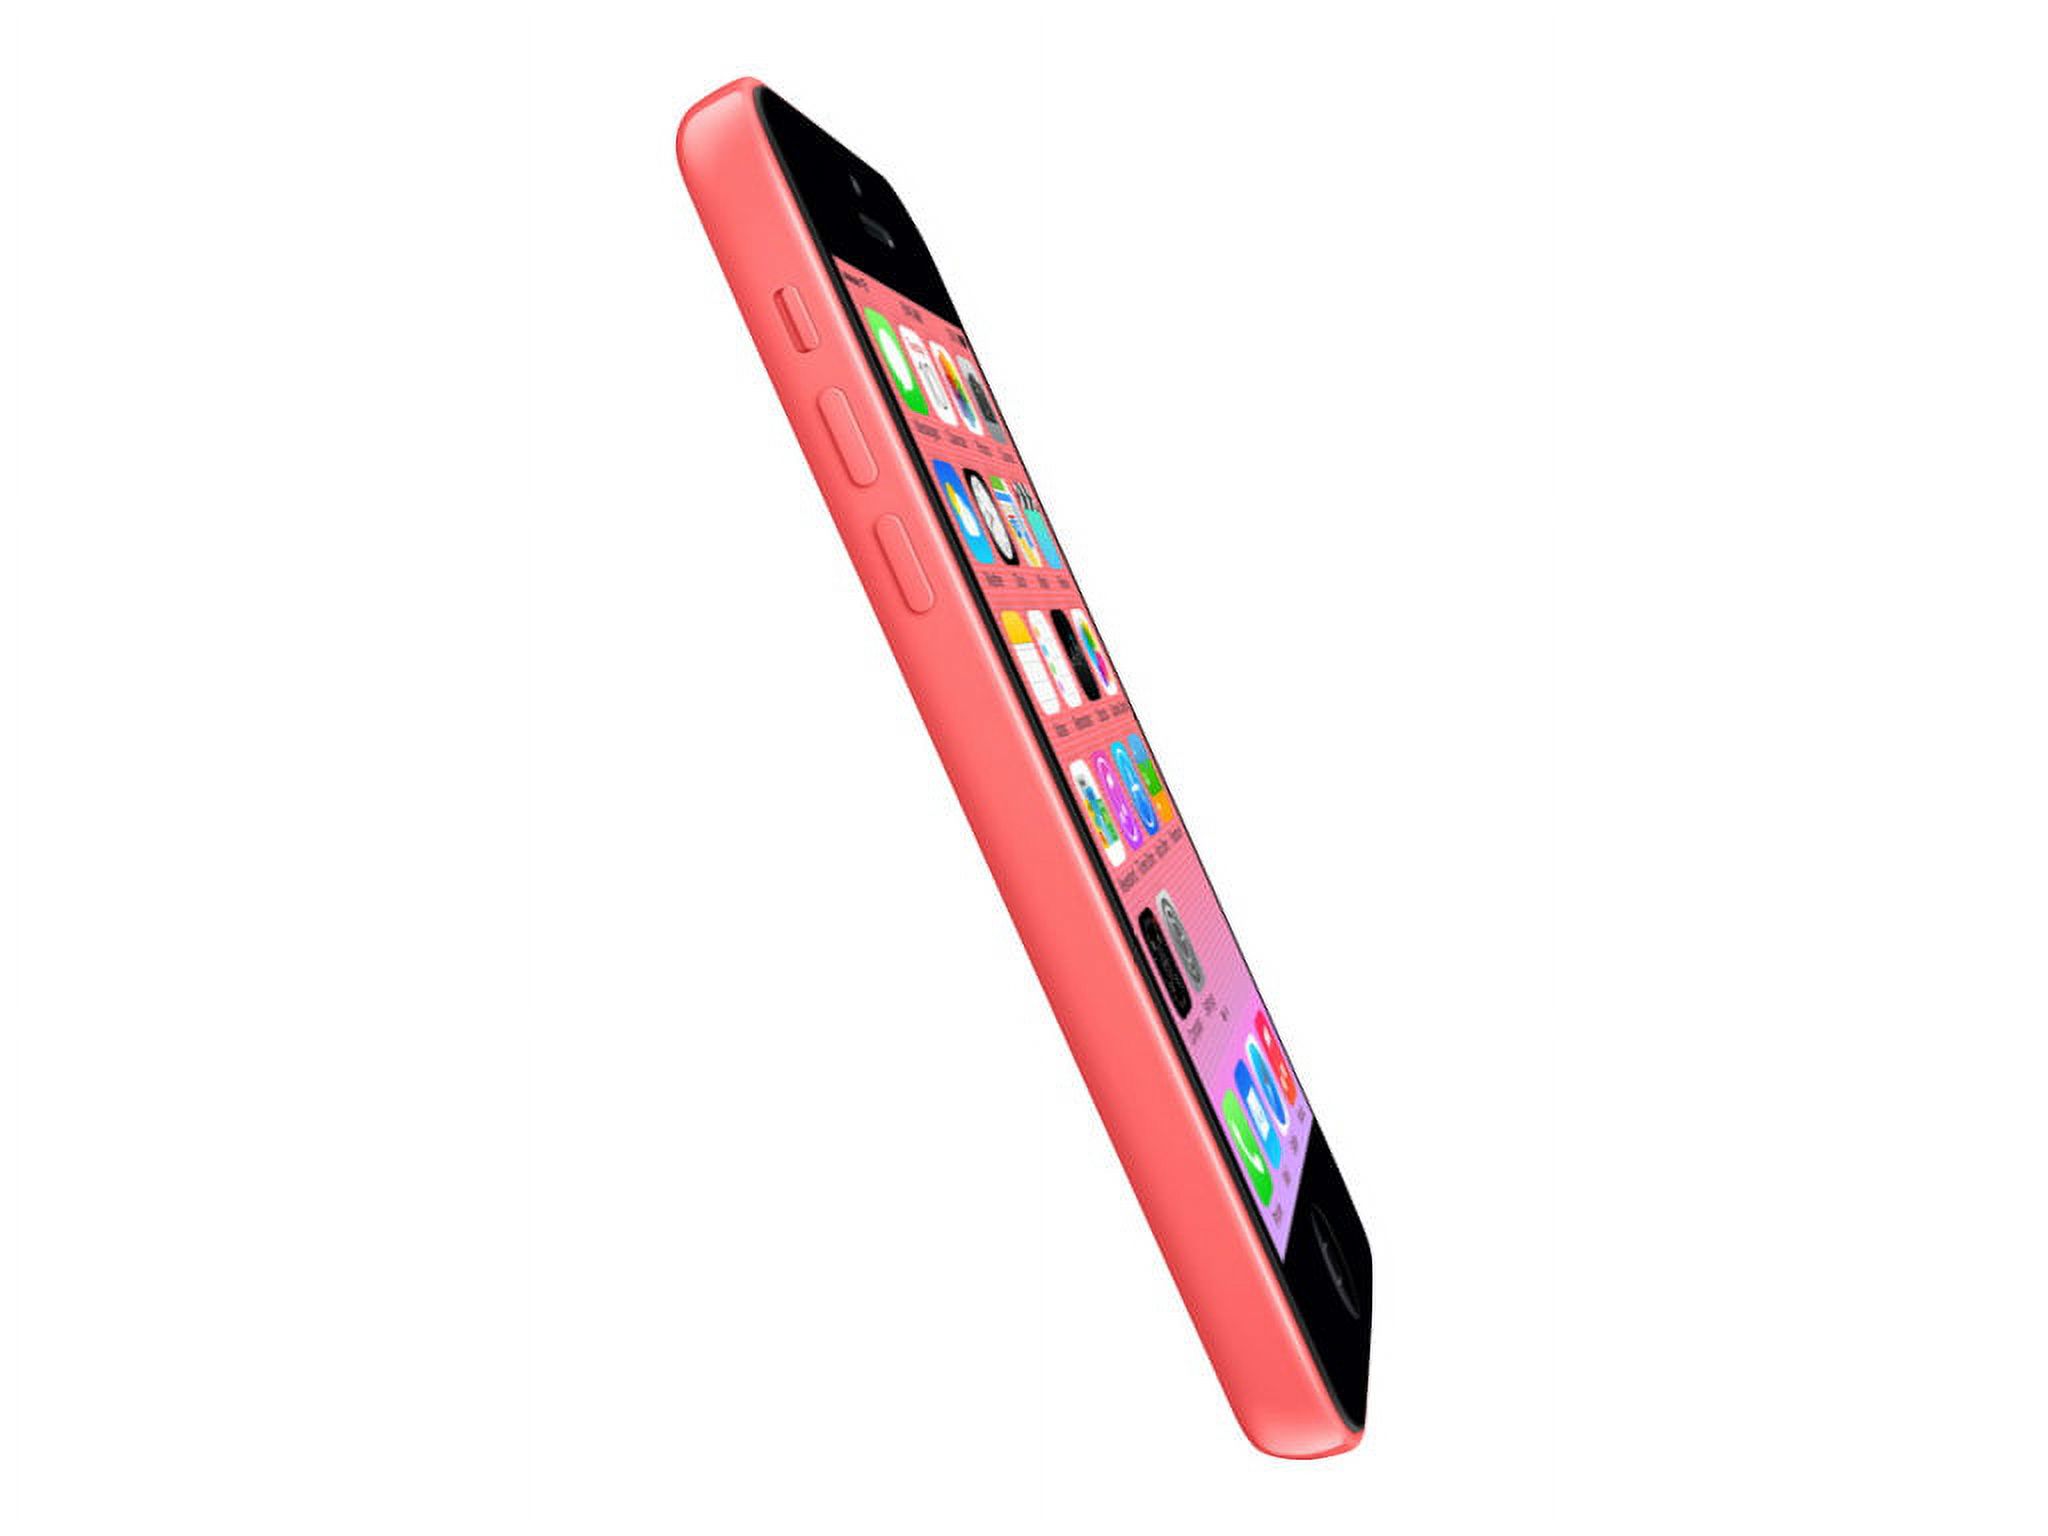 Restored Apple iPhone 5c 8GB, Pink - Unlocked (Refurbished) - image 3 of 8